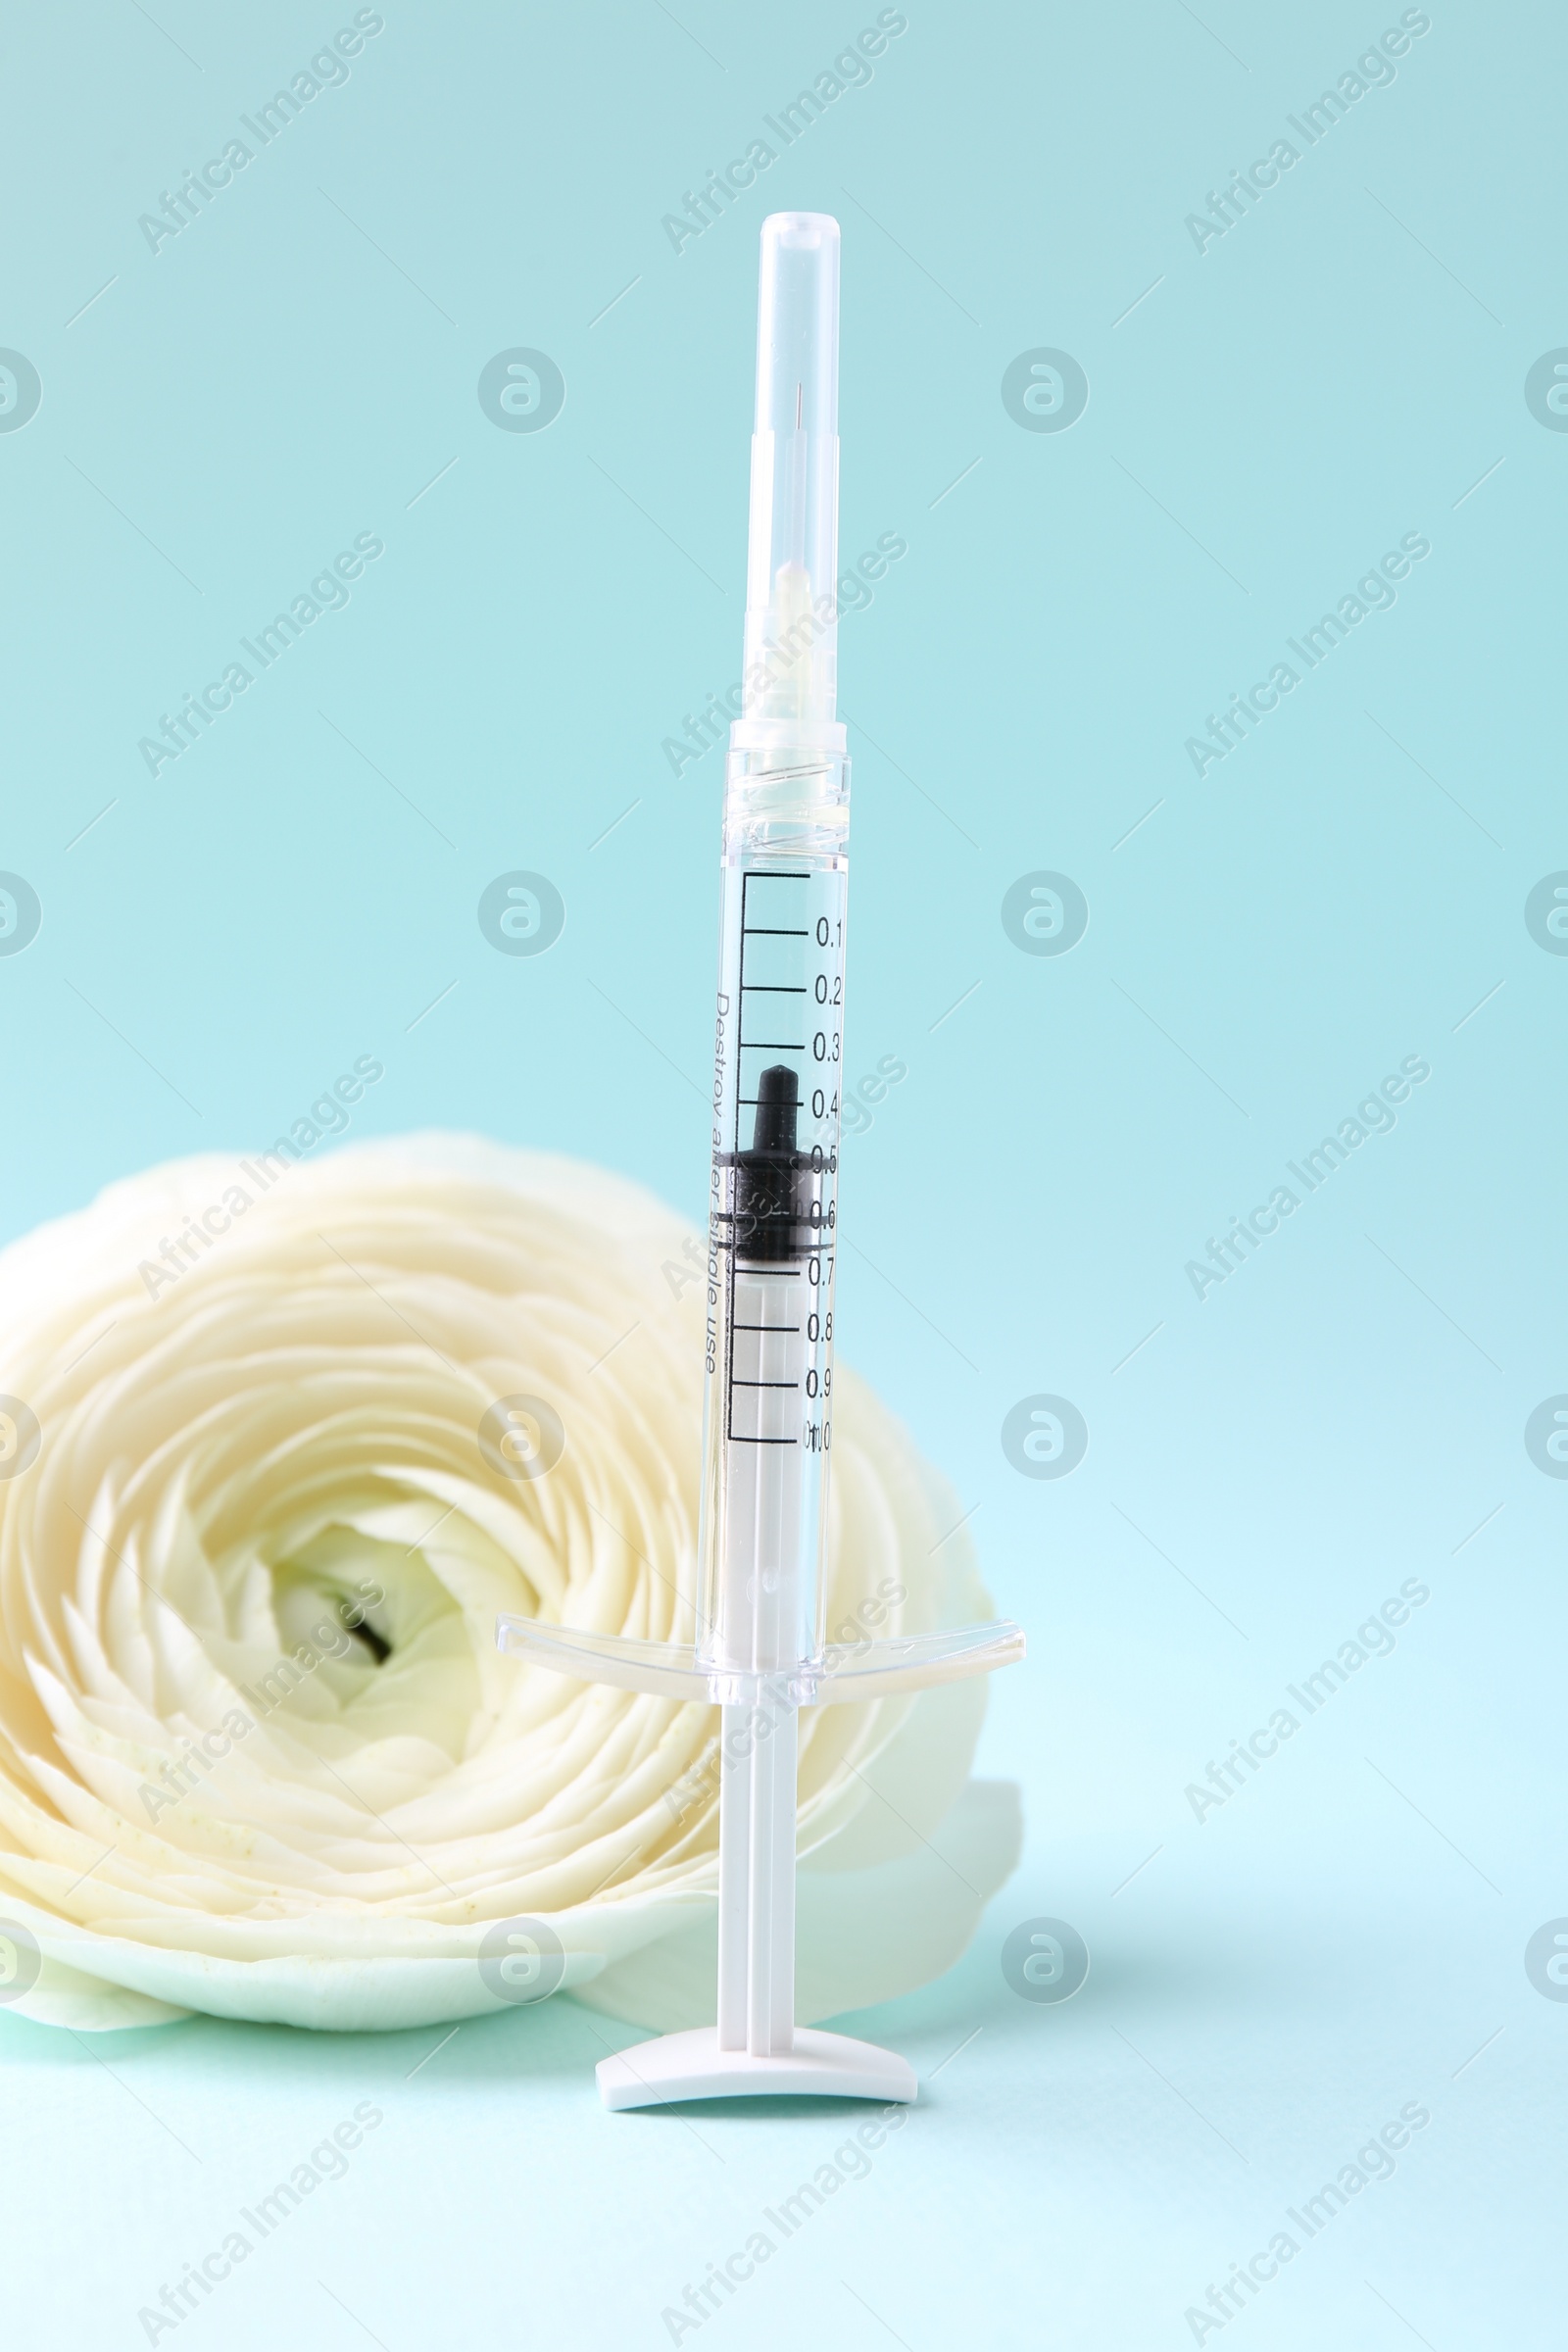 Photo of Cosmetology. Medical syringe and ranunculus flower on light blue background